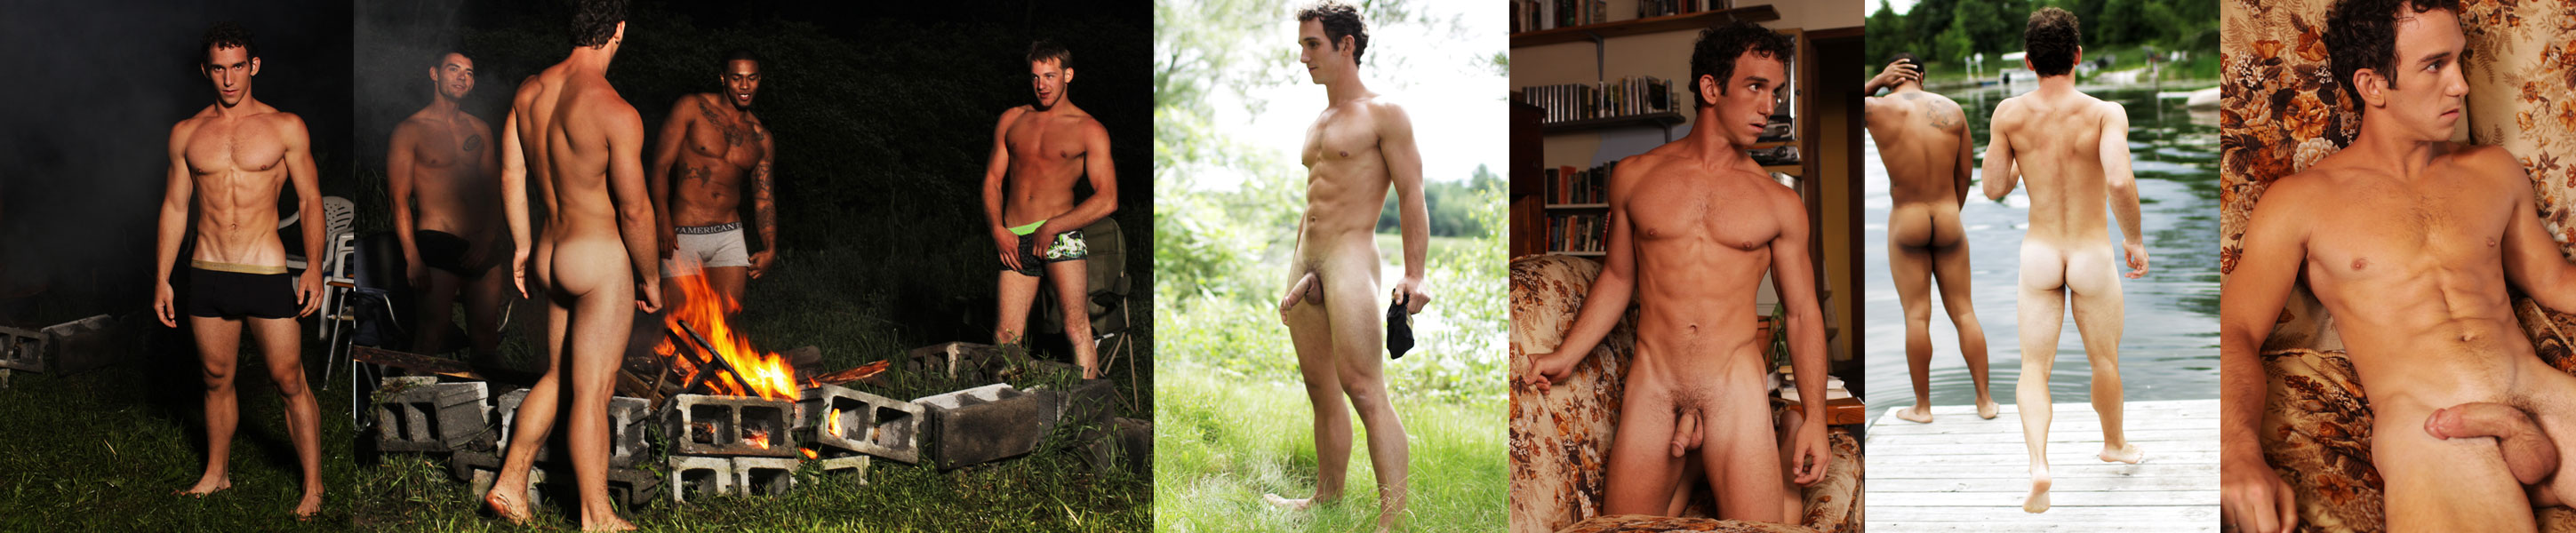 Greg mckeon playgirl model nude